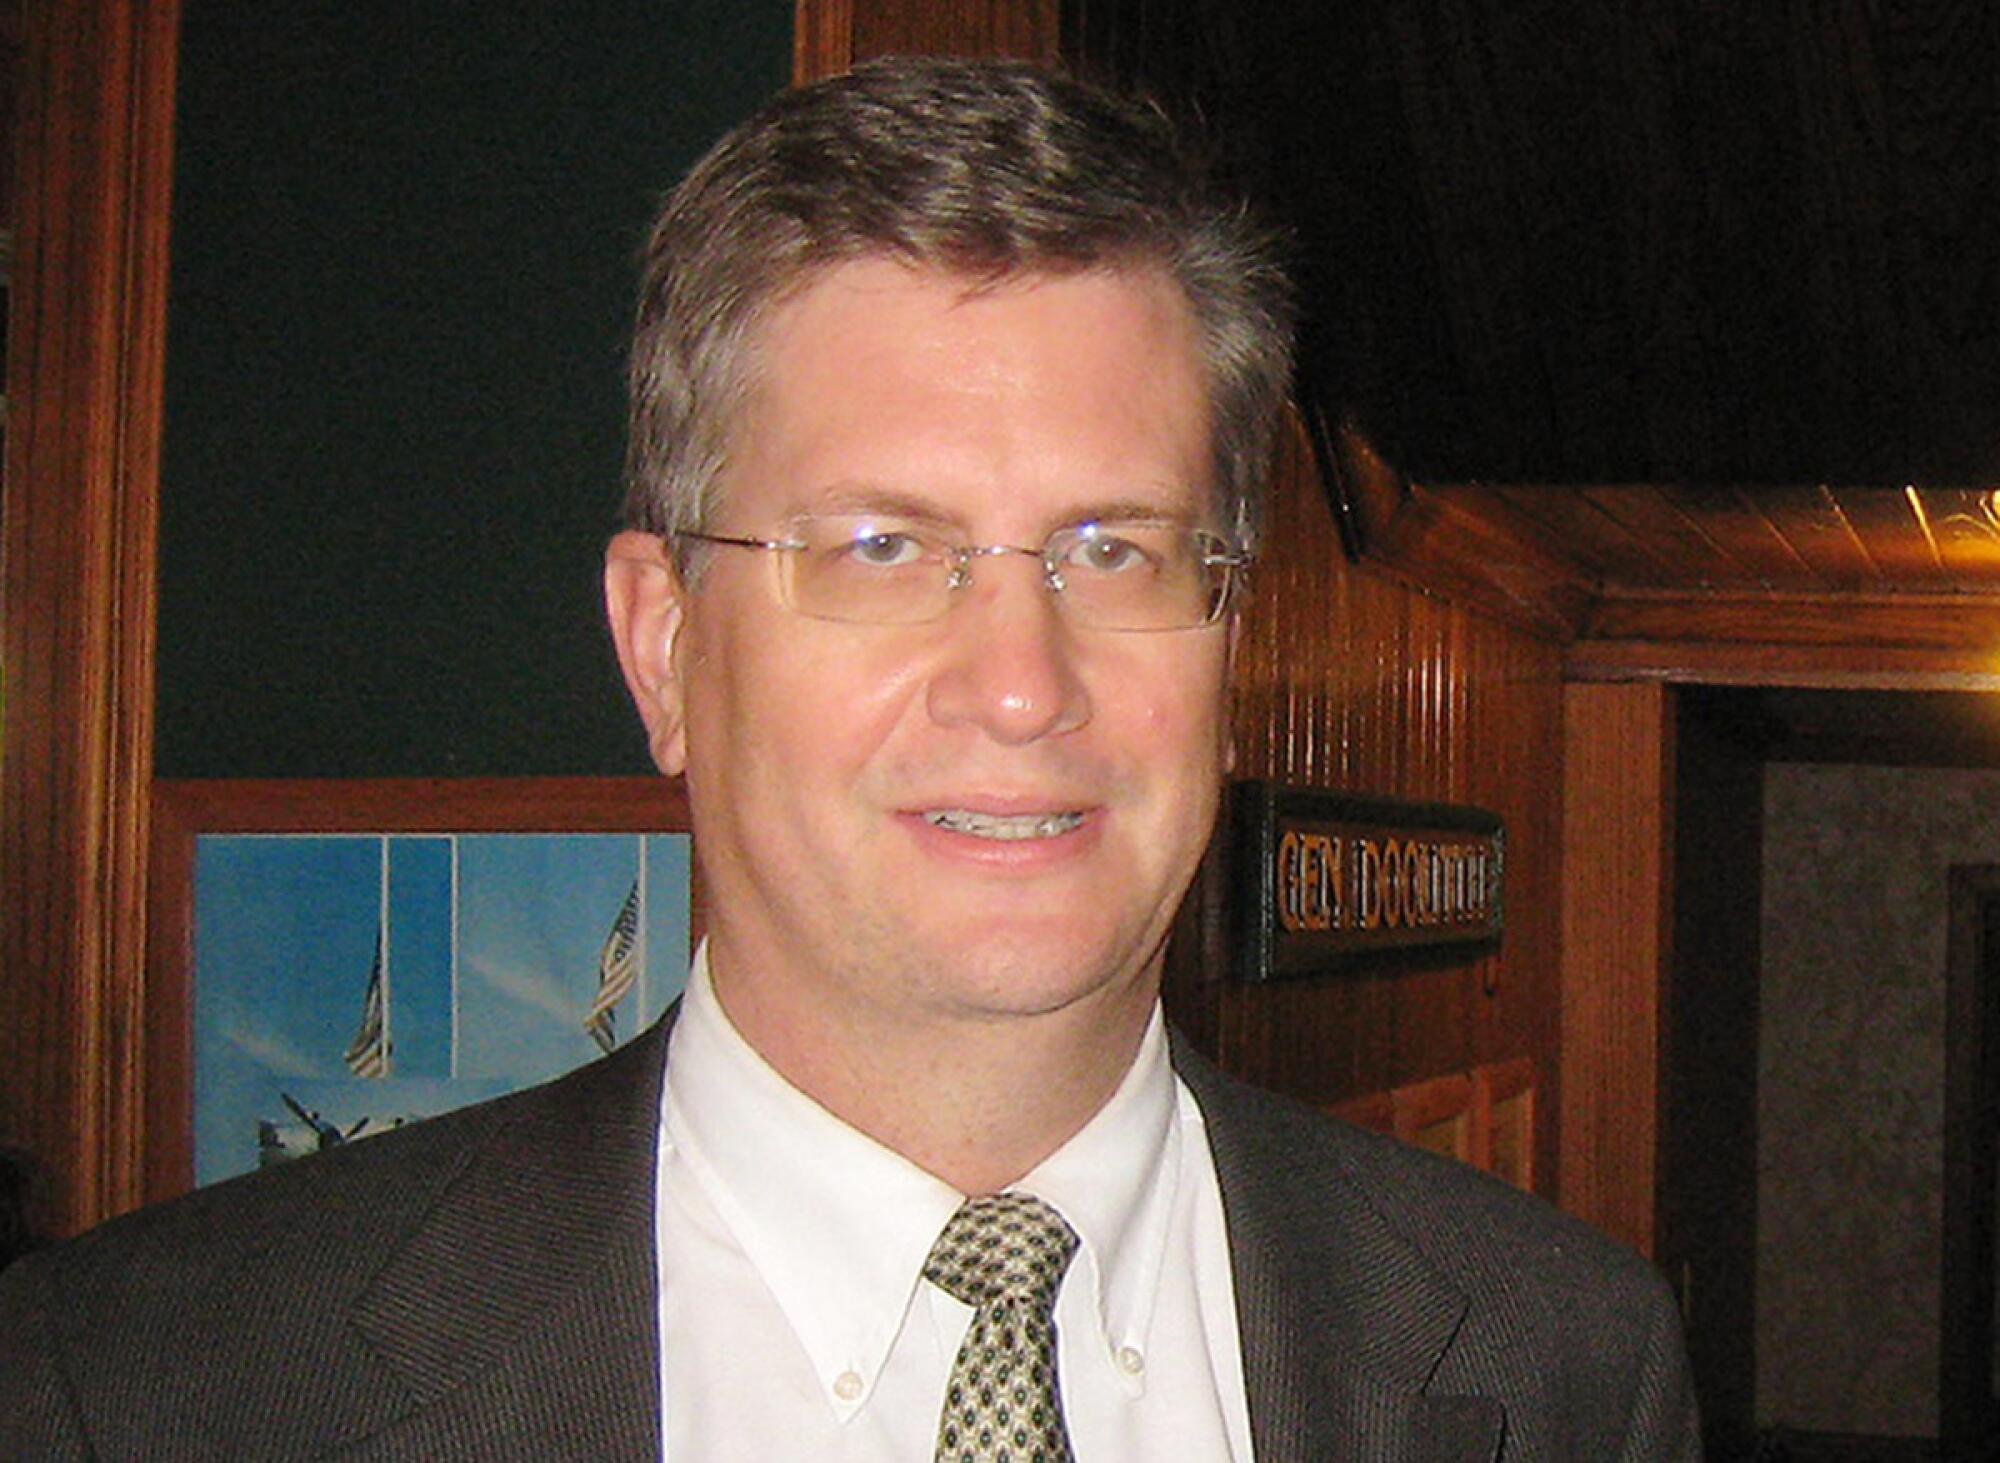 Eye surgeon Mark Sawusch in September 2008